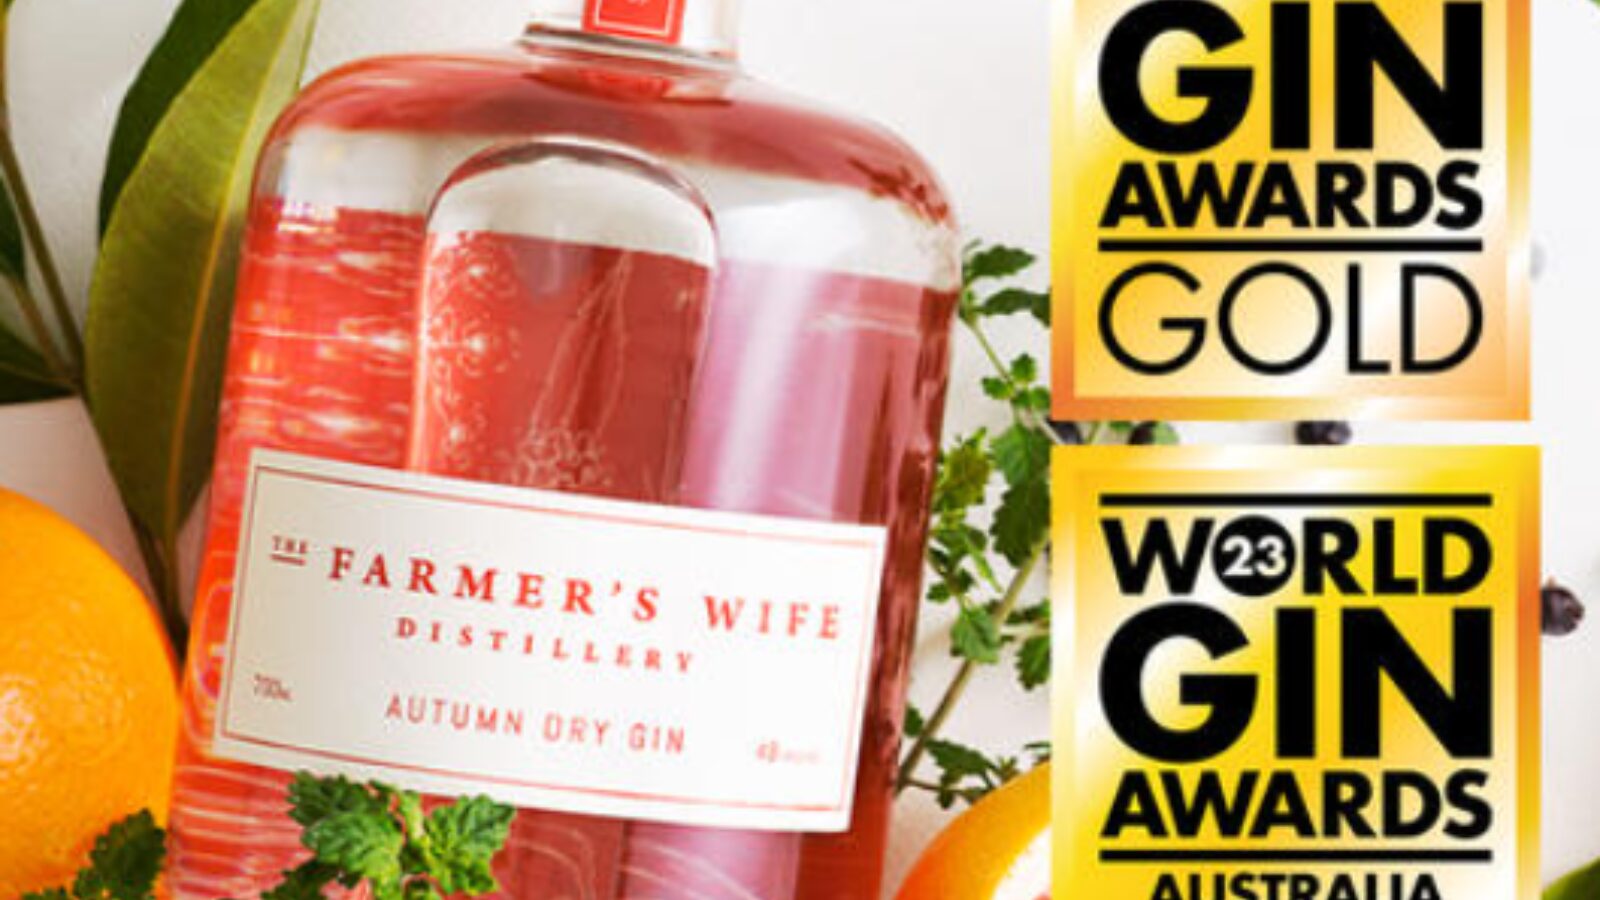 Farmers Wife gin Gold award 2023